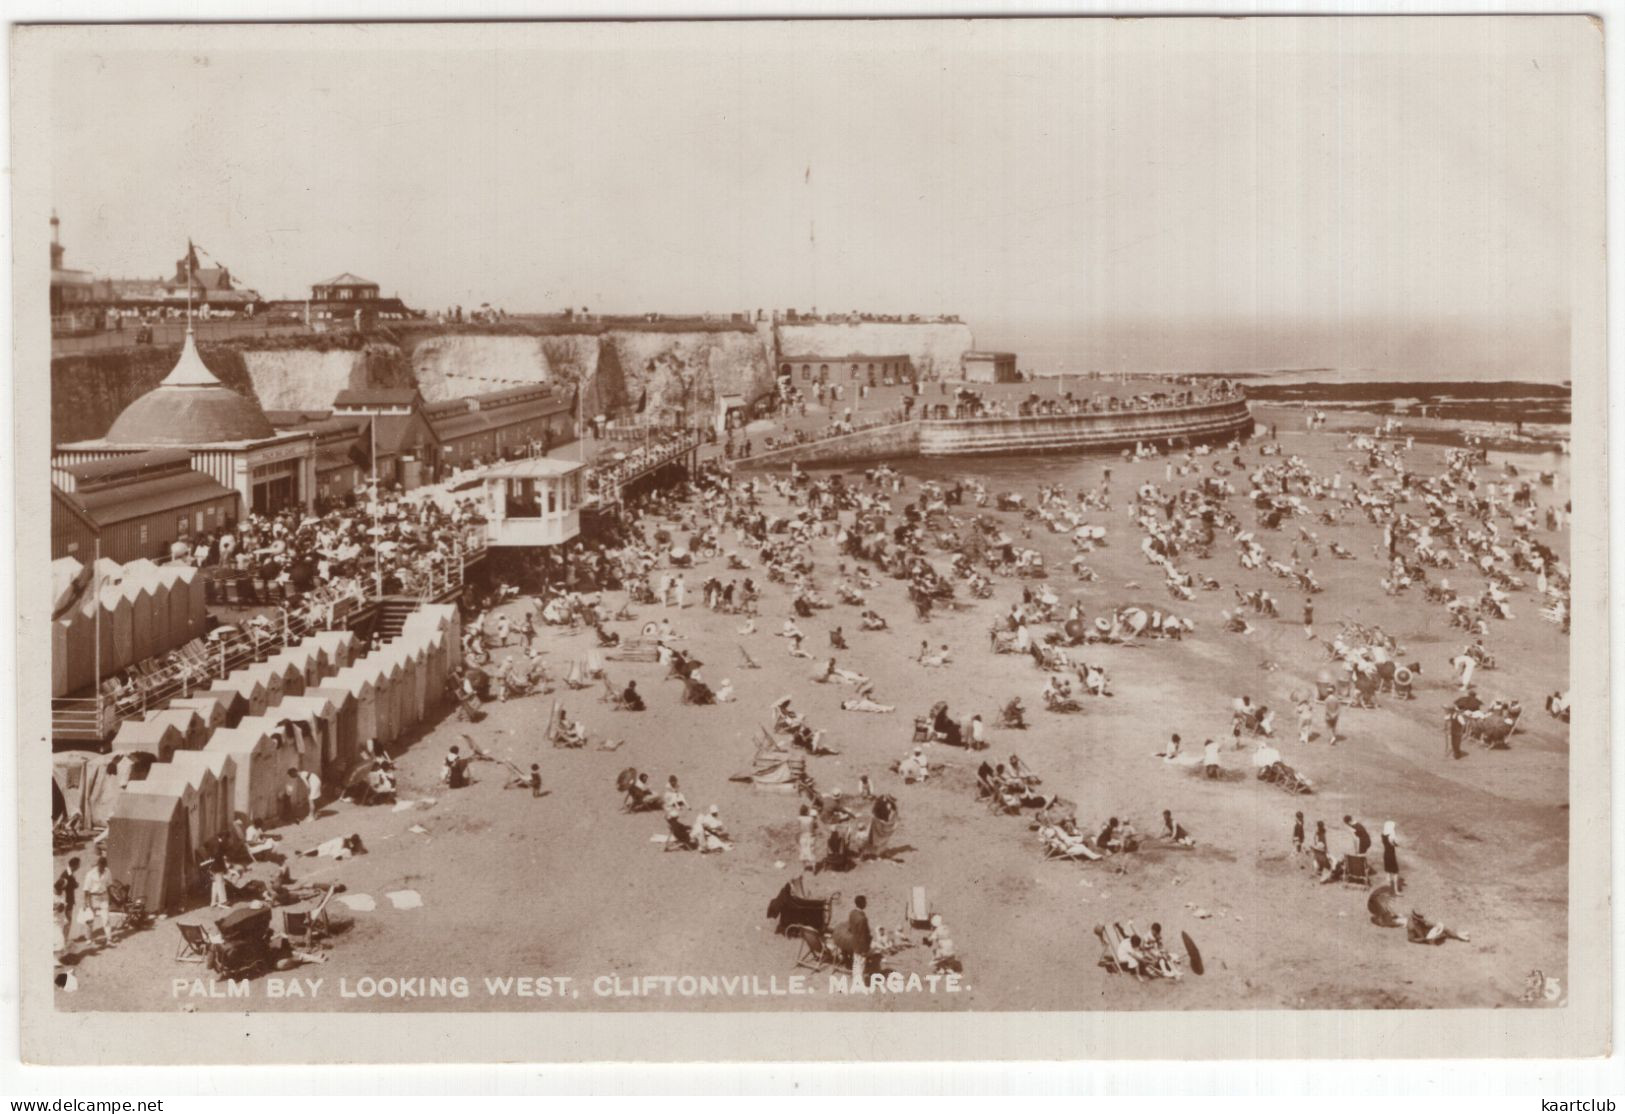 Palm Bay Looking West, Cliftonville, Margate - (England, U.K.) - 1928 - Margate